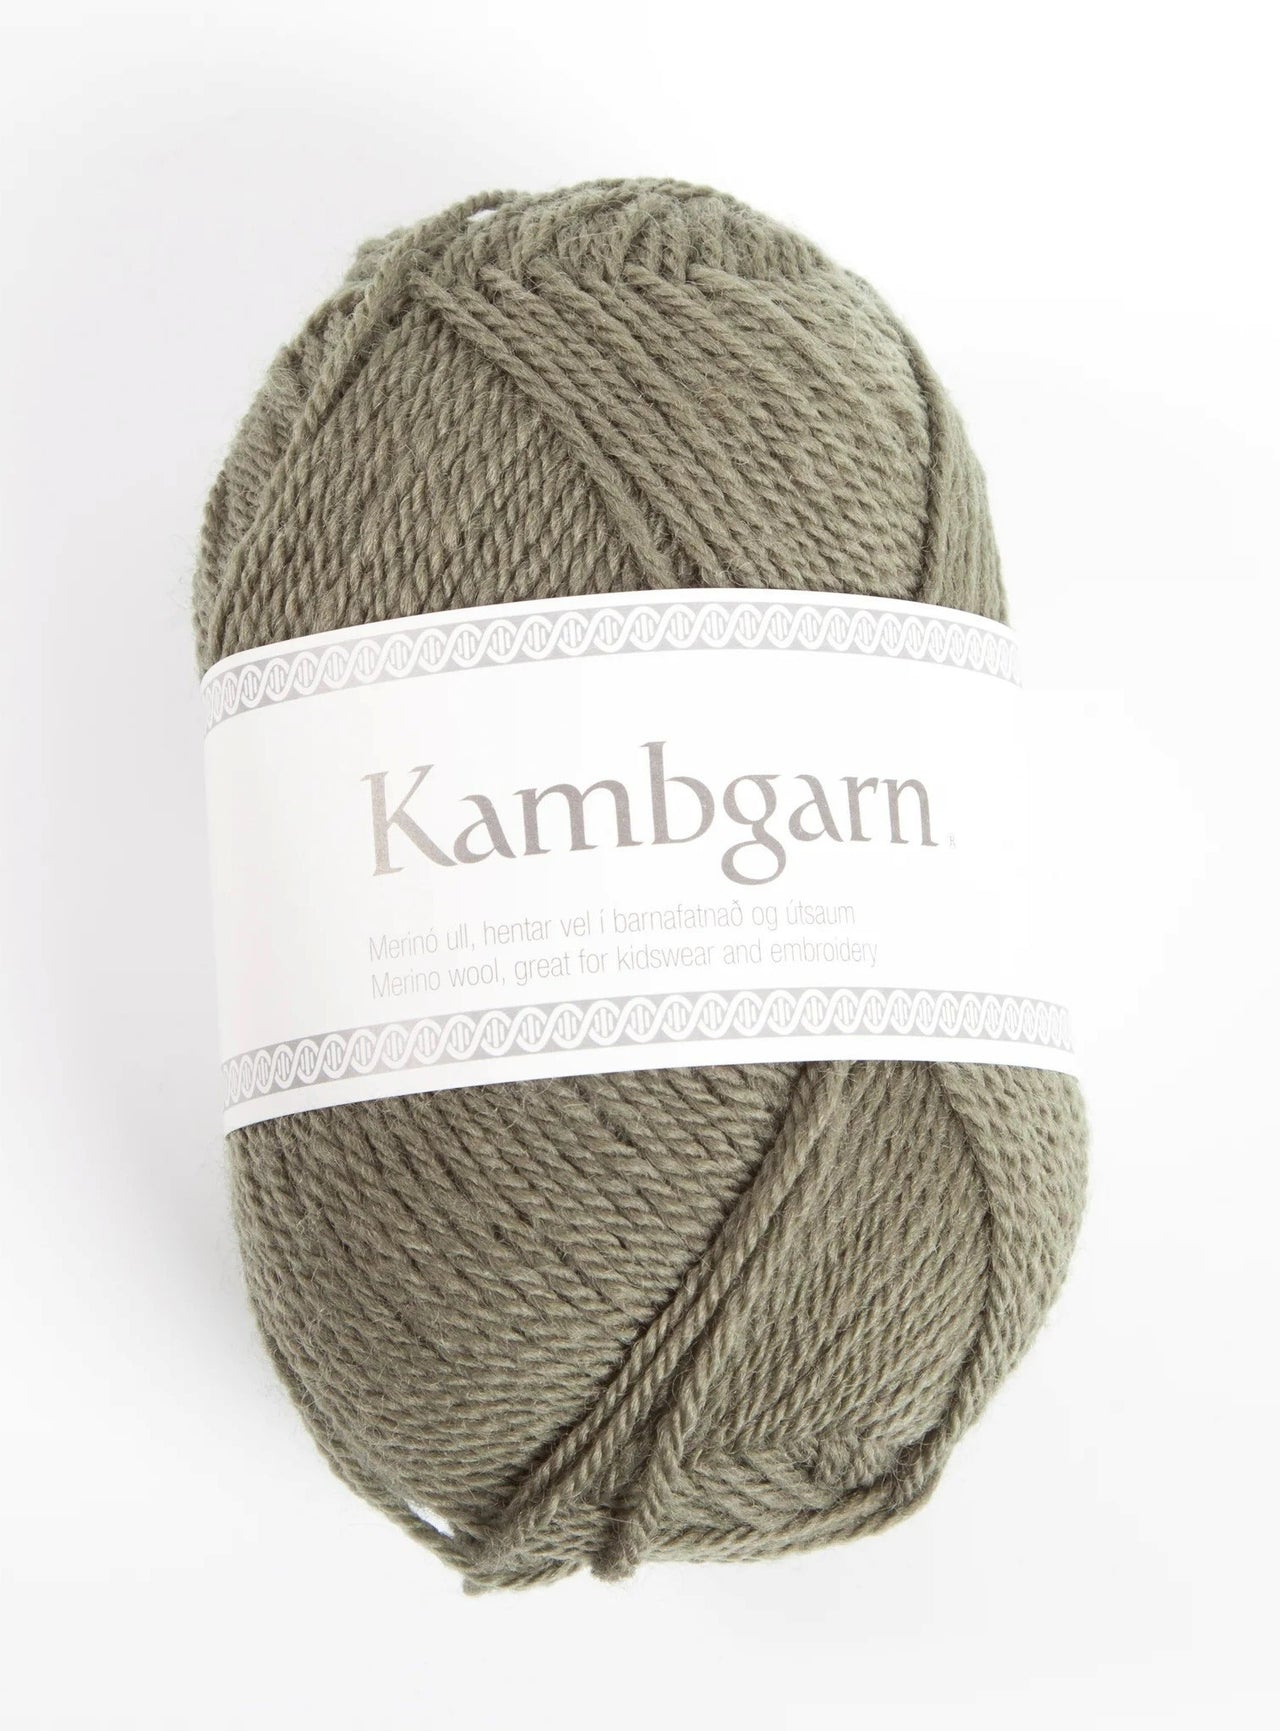 Kambgarn - 1208 - moss green